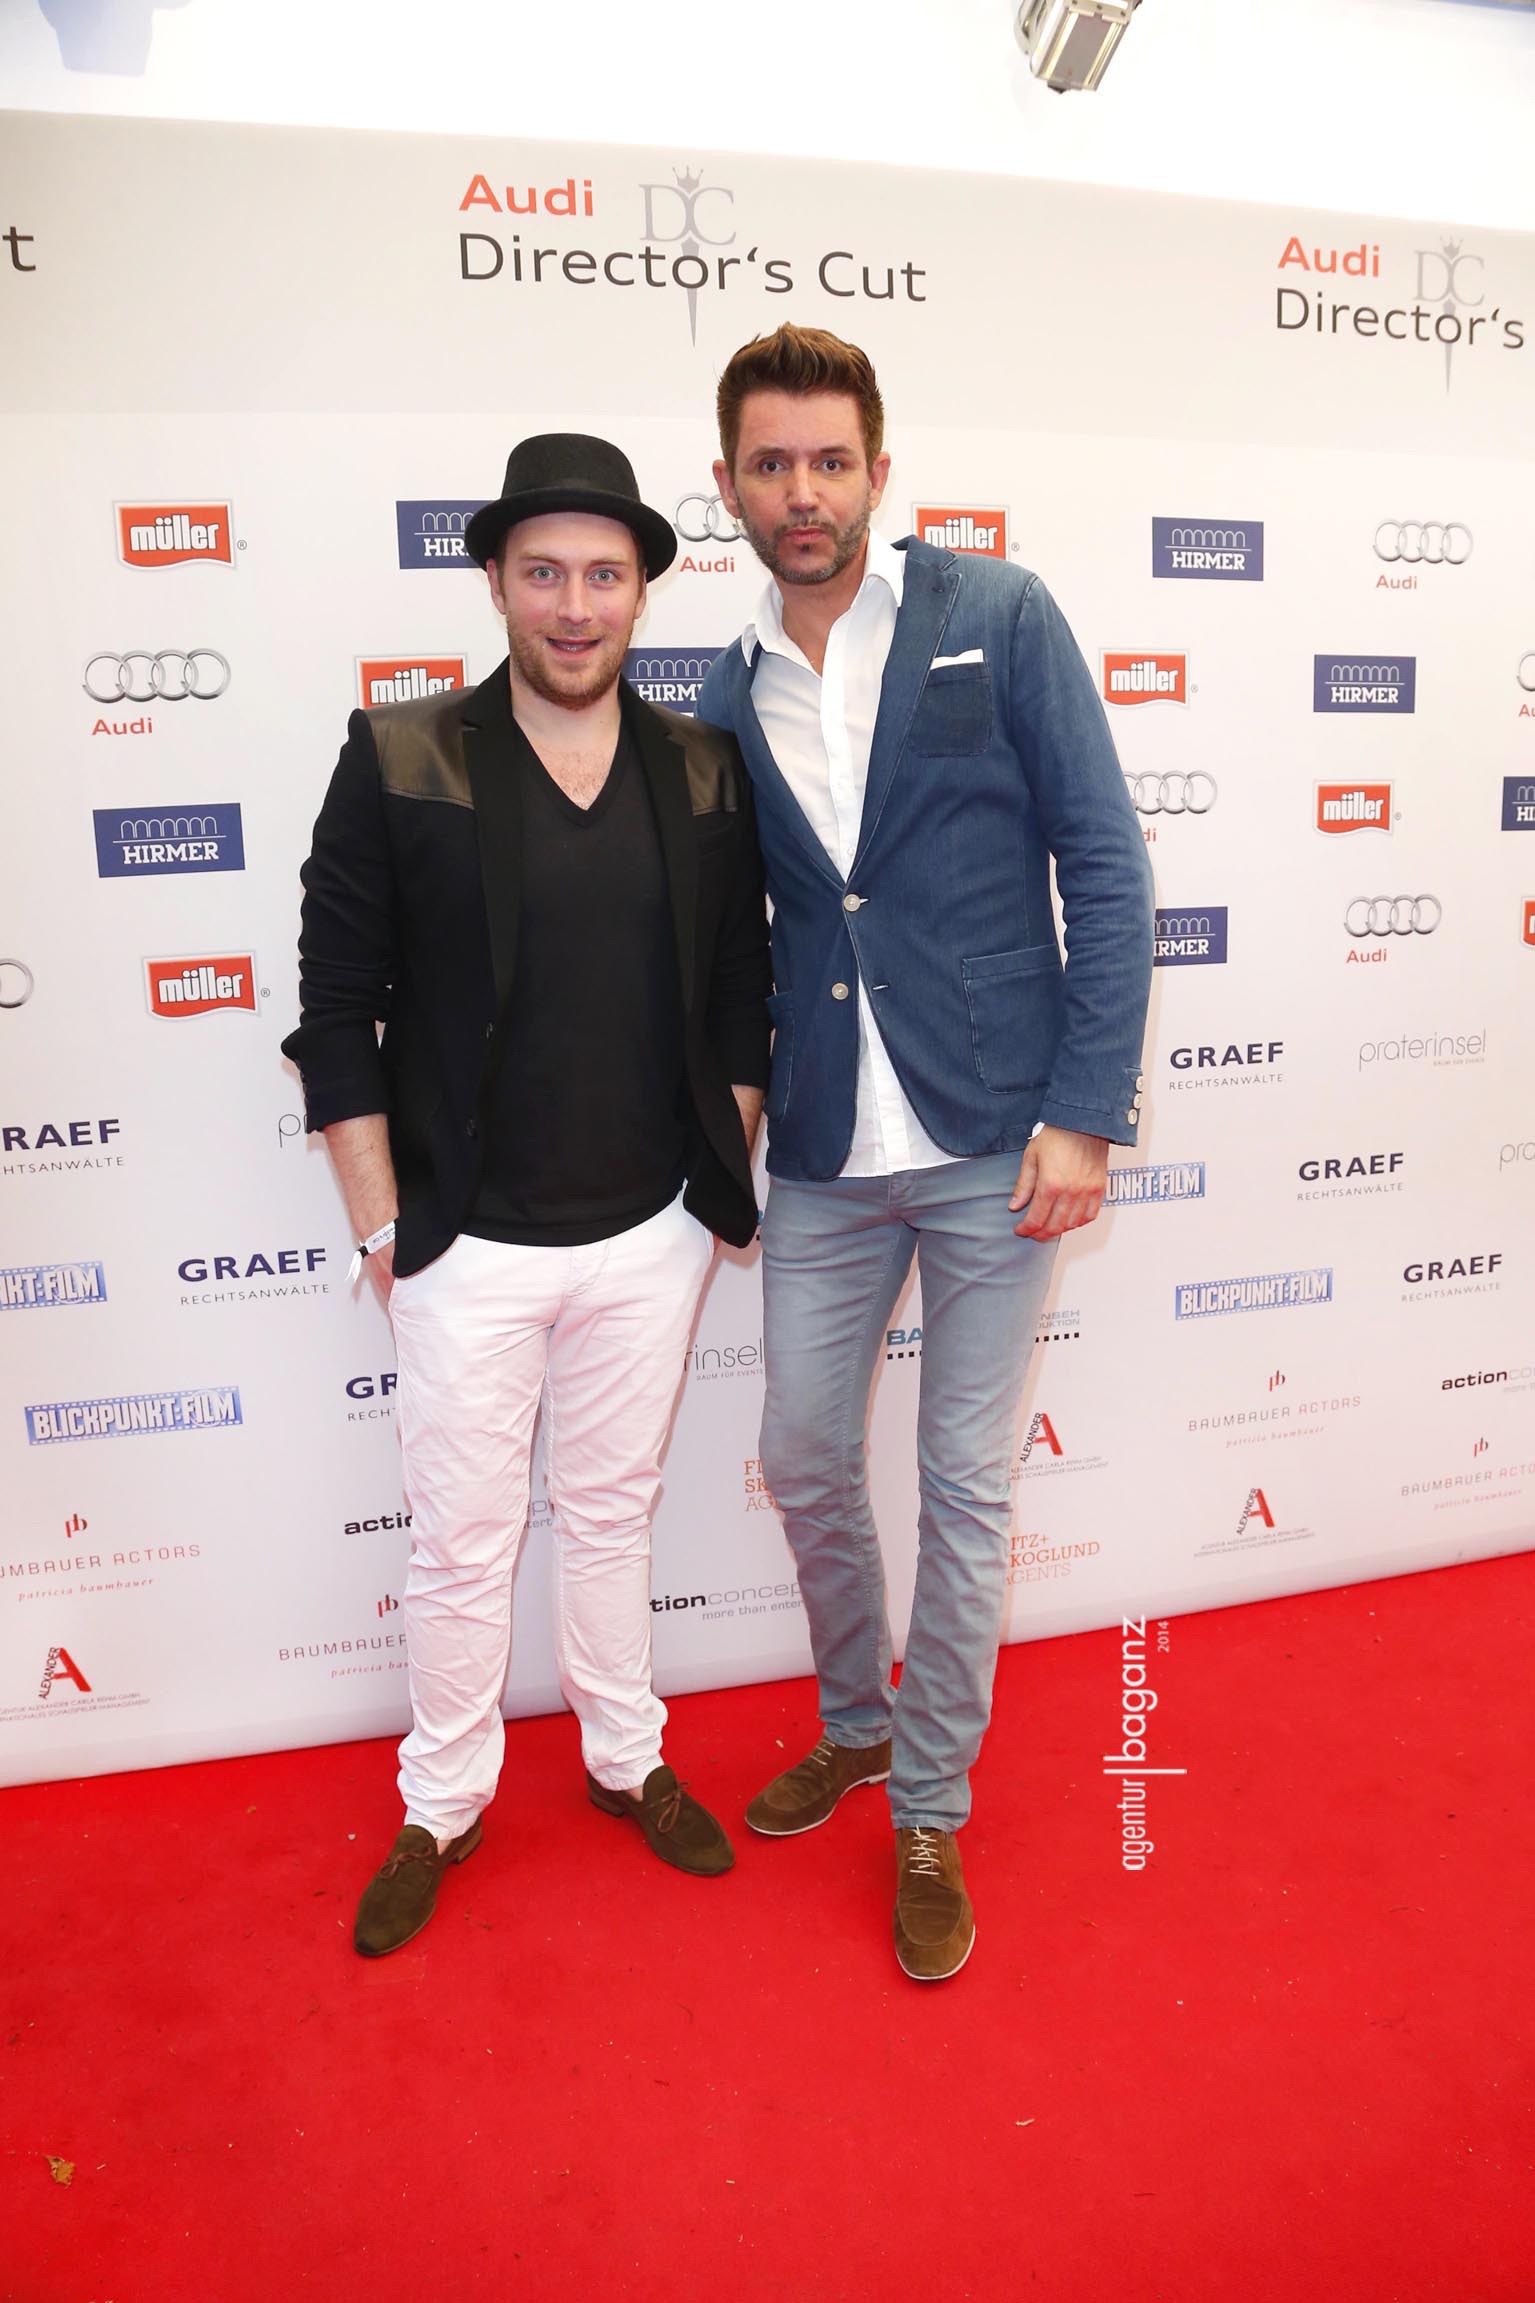 Martin Stange (left) at Audi Director's Cut event during Munich Film Festival (2014)